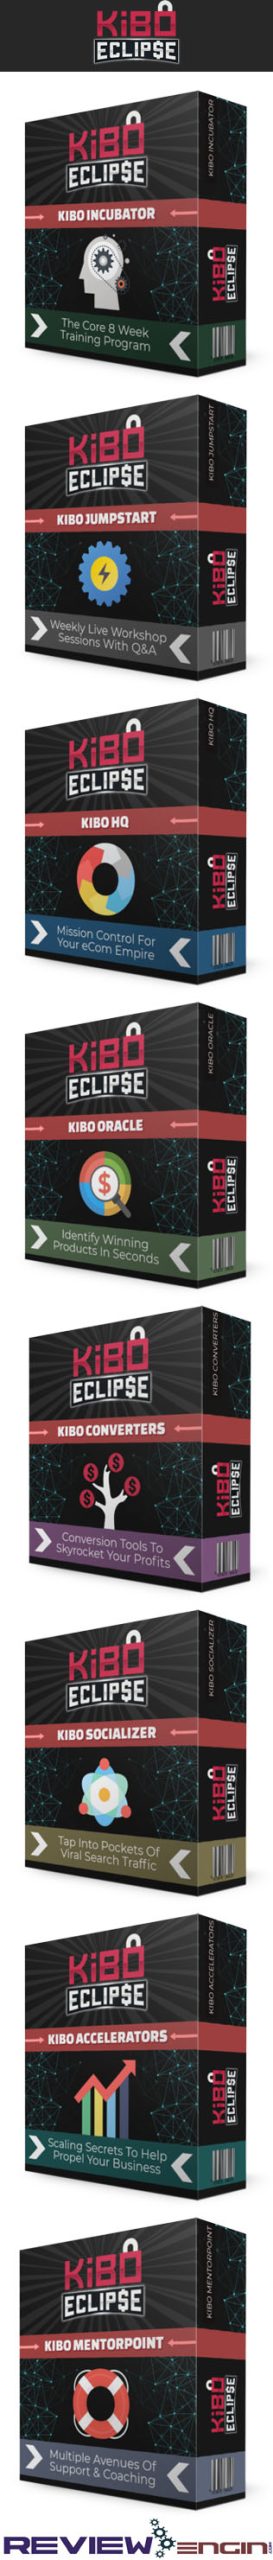 8 Components of Kibo Eclipse